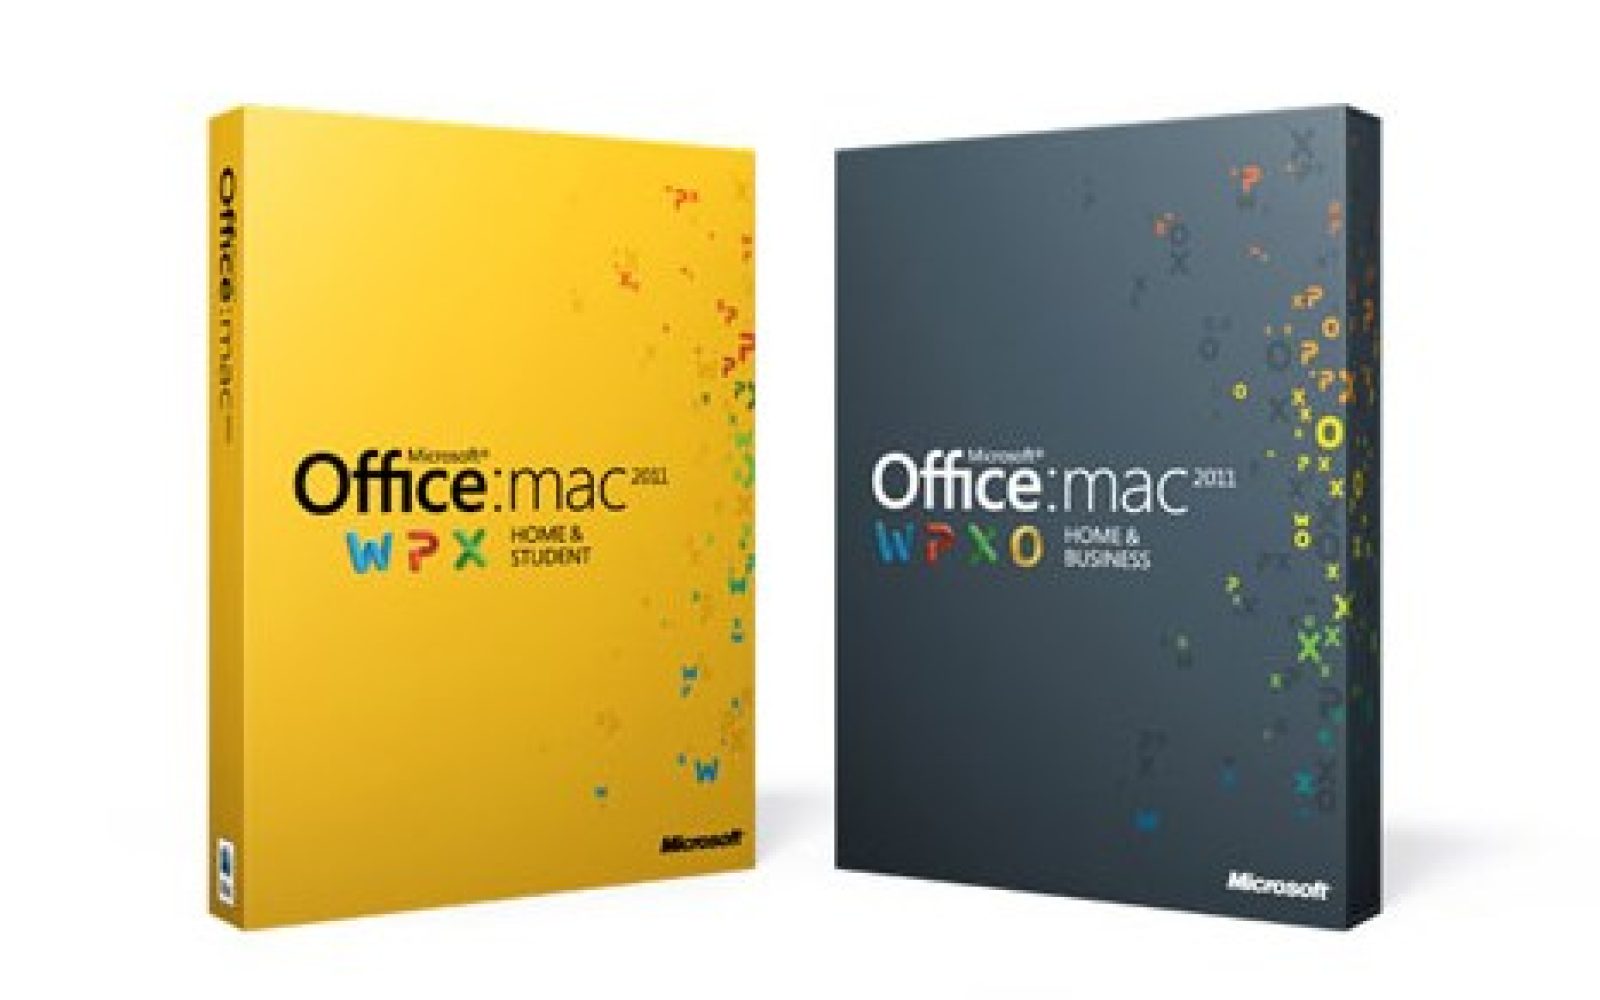 Microsoft Office 2011 Autoupdate Mac Not Working